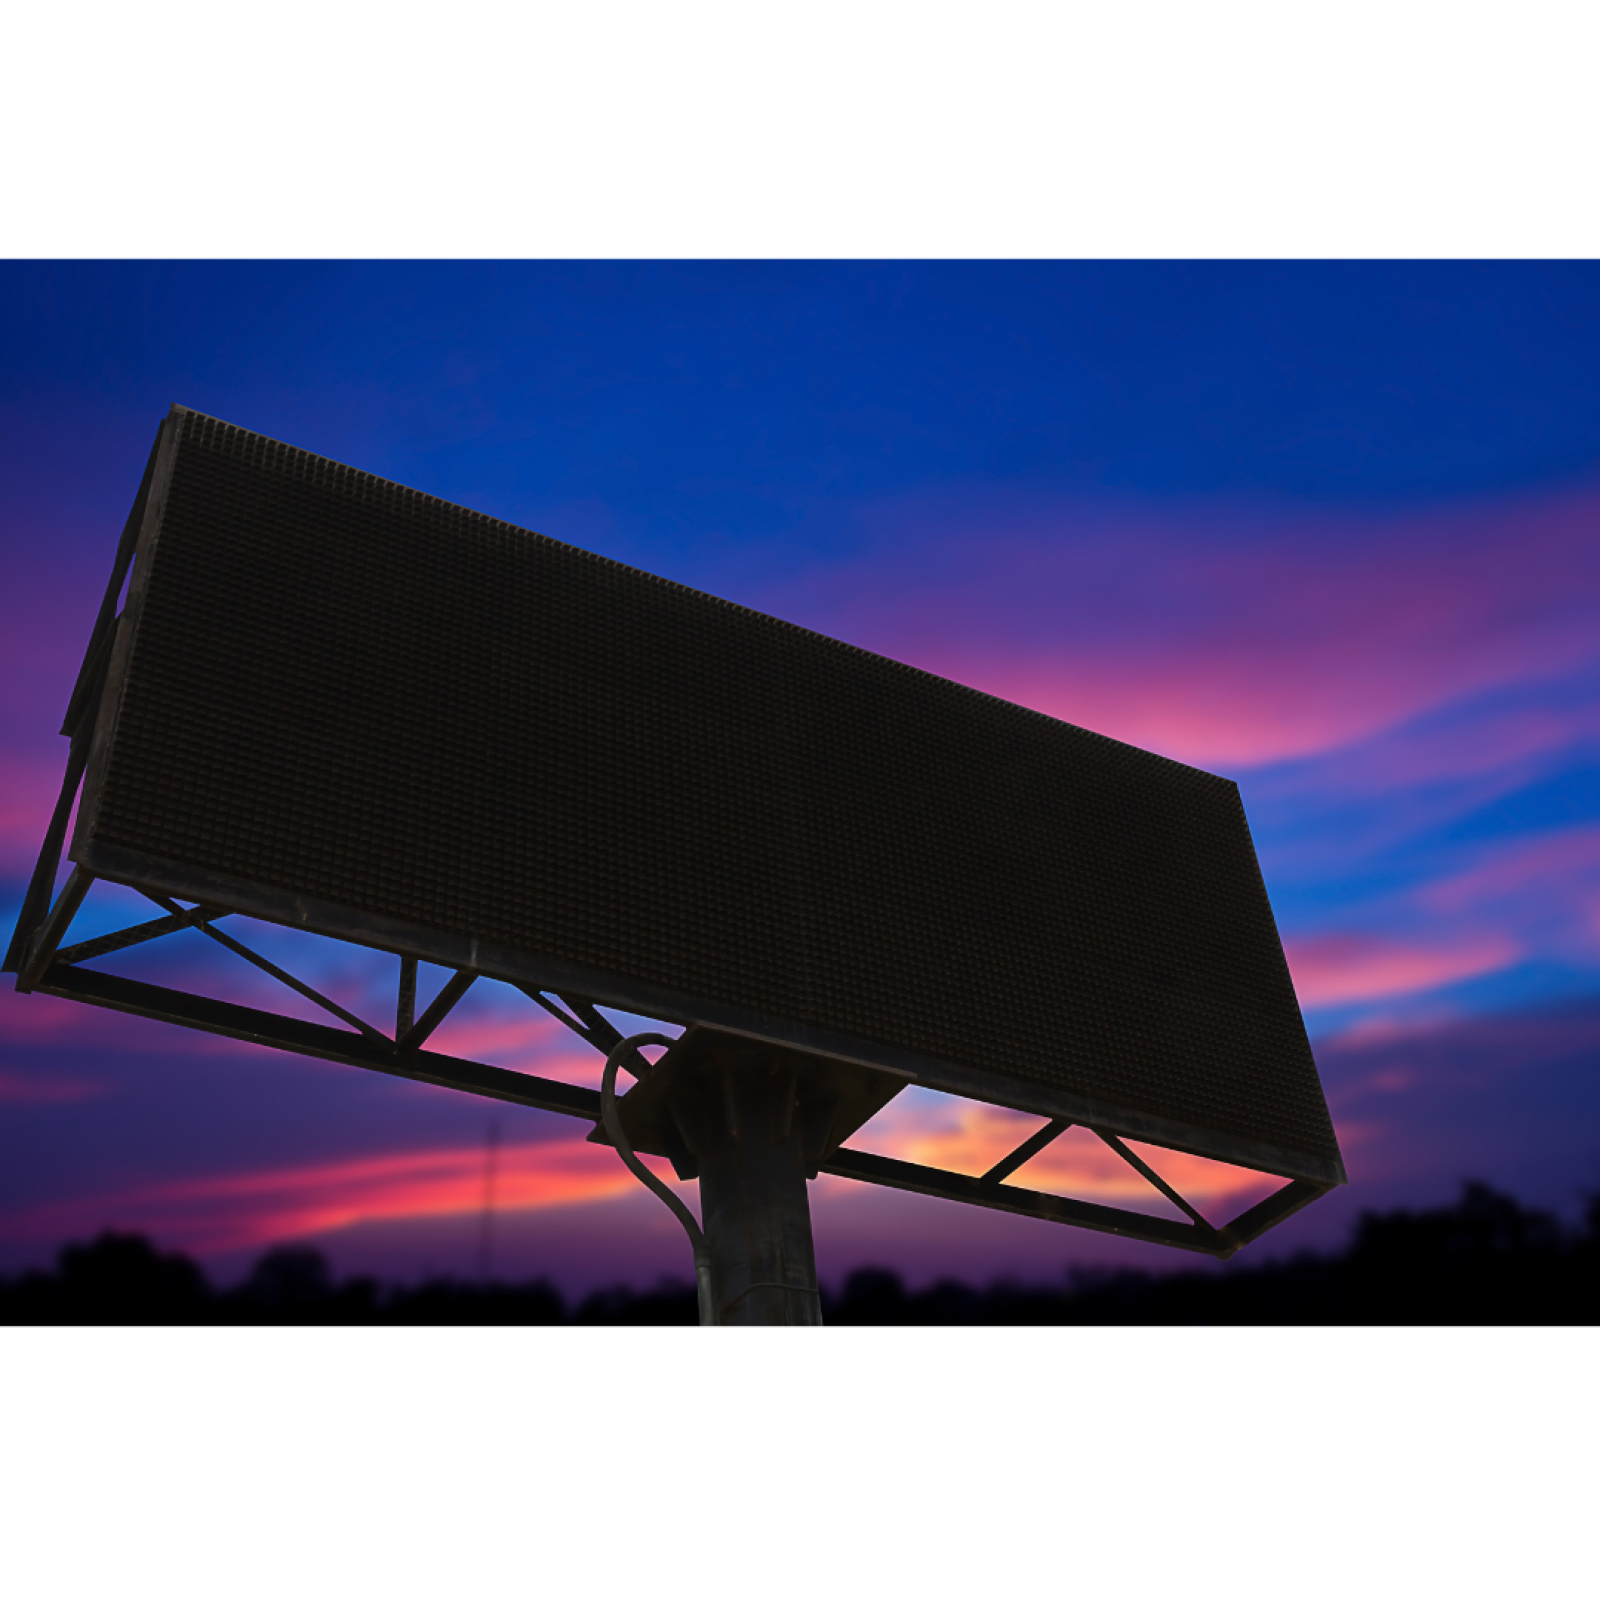 Digital billboard shown during a sunset.